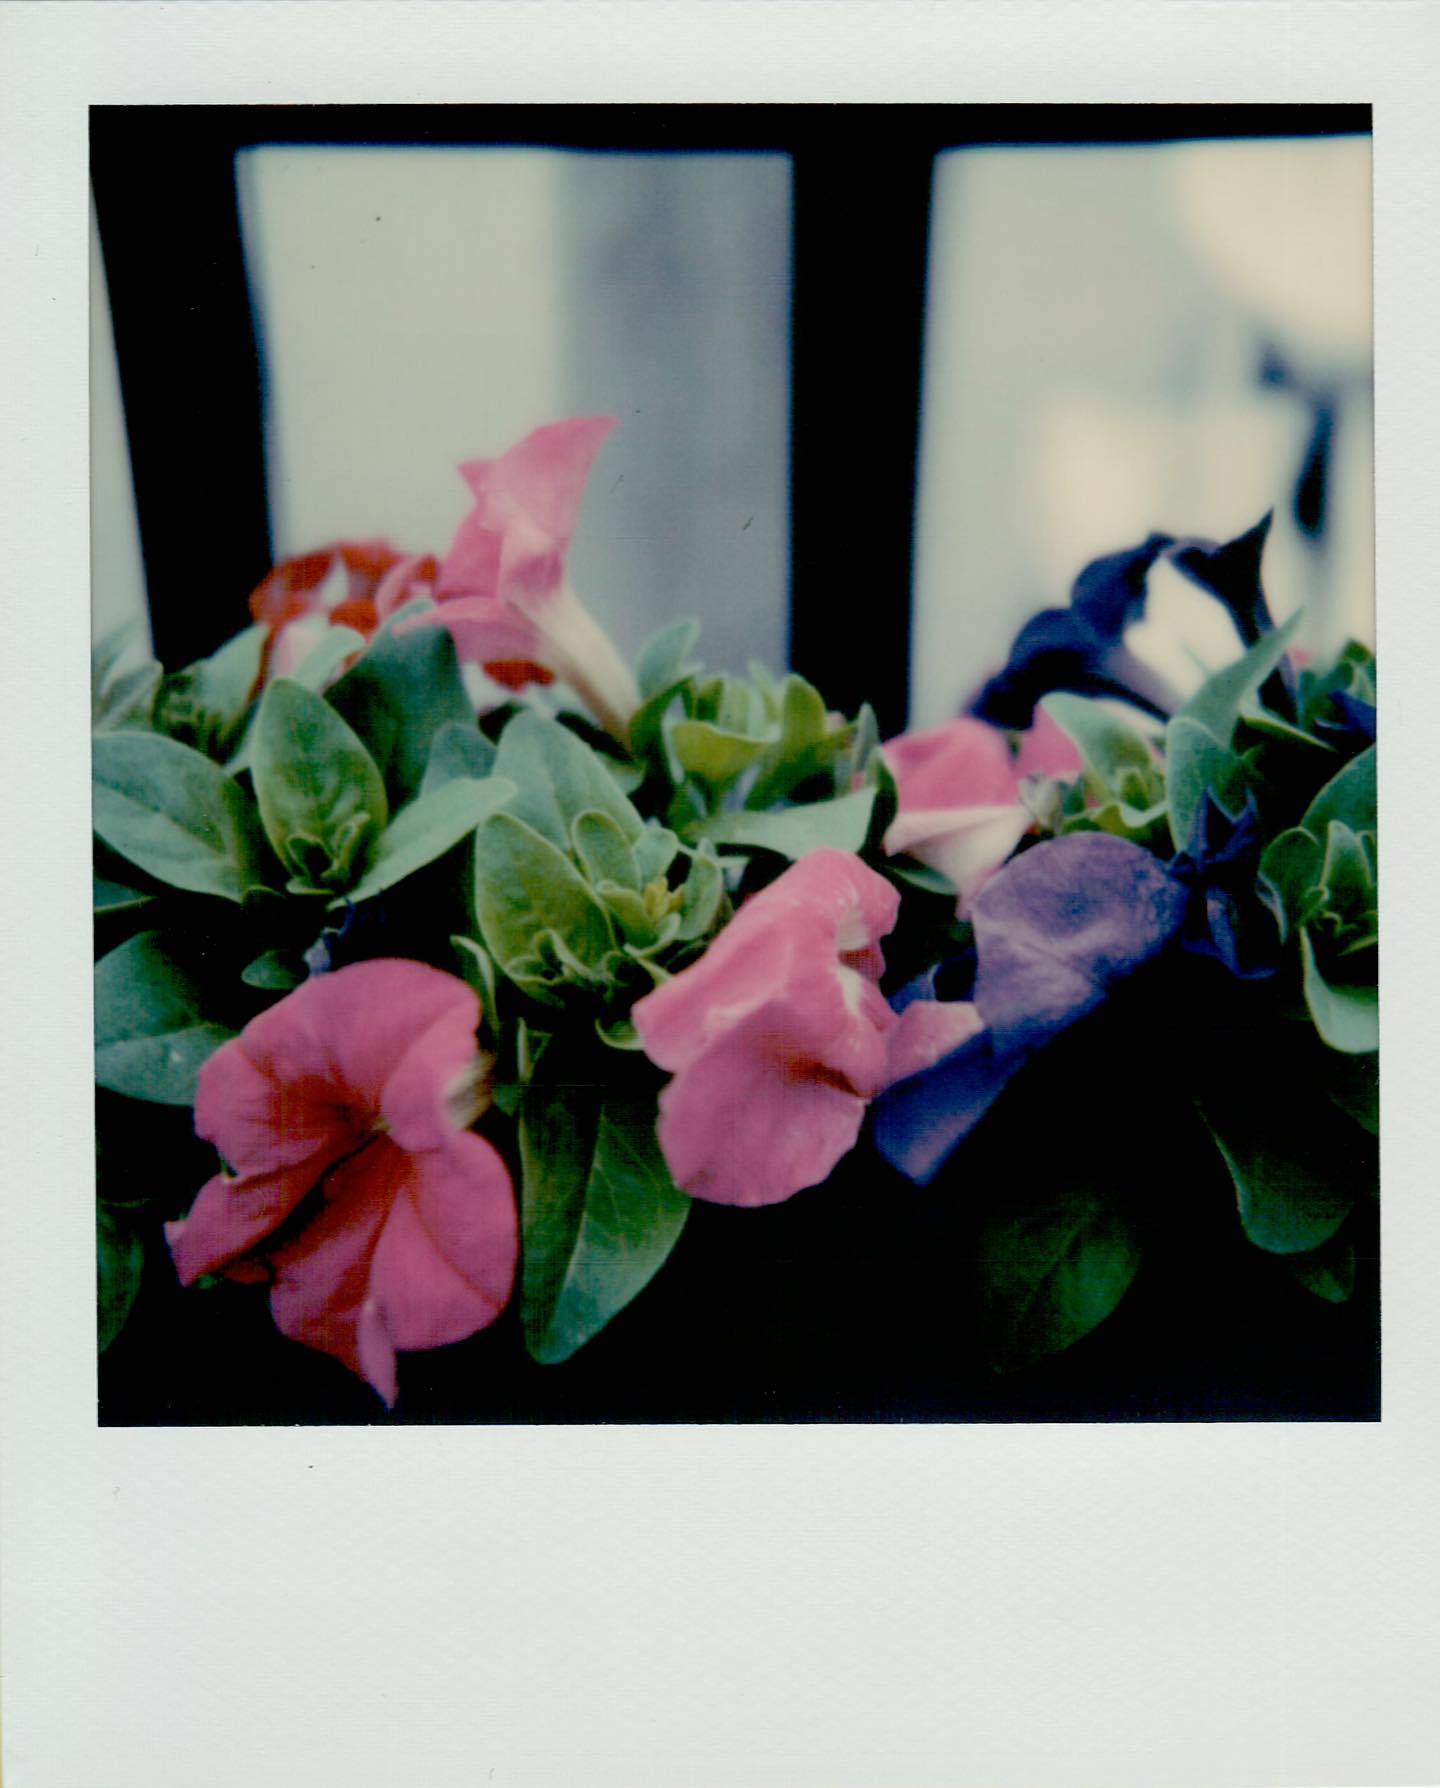 Flowers.

Another shot from my new @mintcamera SLR670-S on @polaroidoriginals SX70 film.

#mintcamera #polaroid #polaroidoriginals #sx70film #film #filmphotography